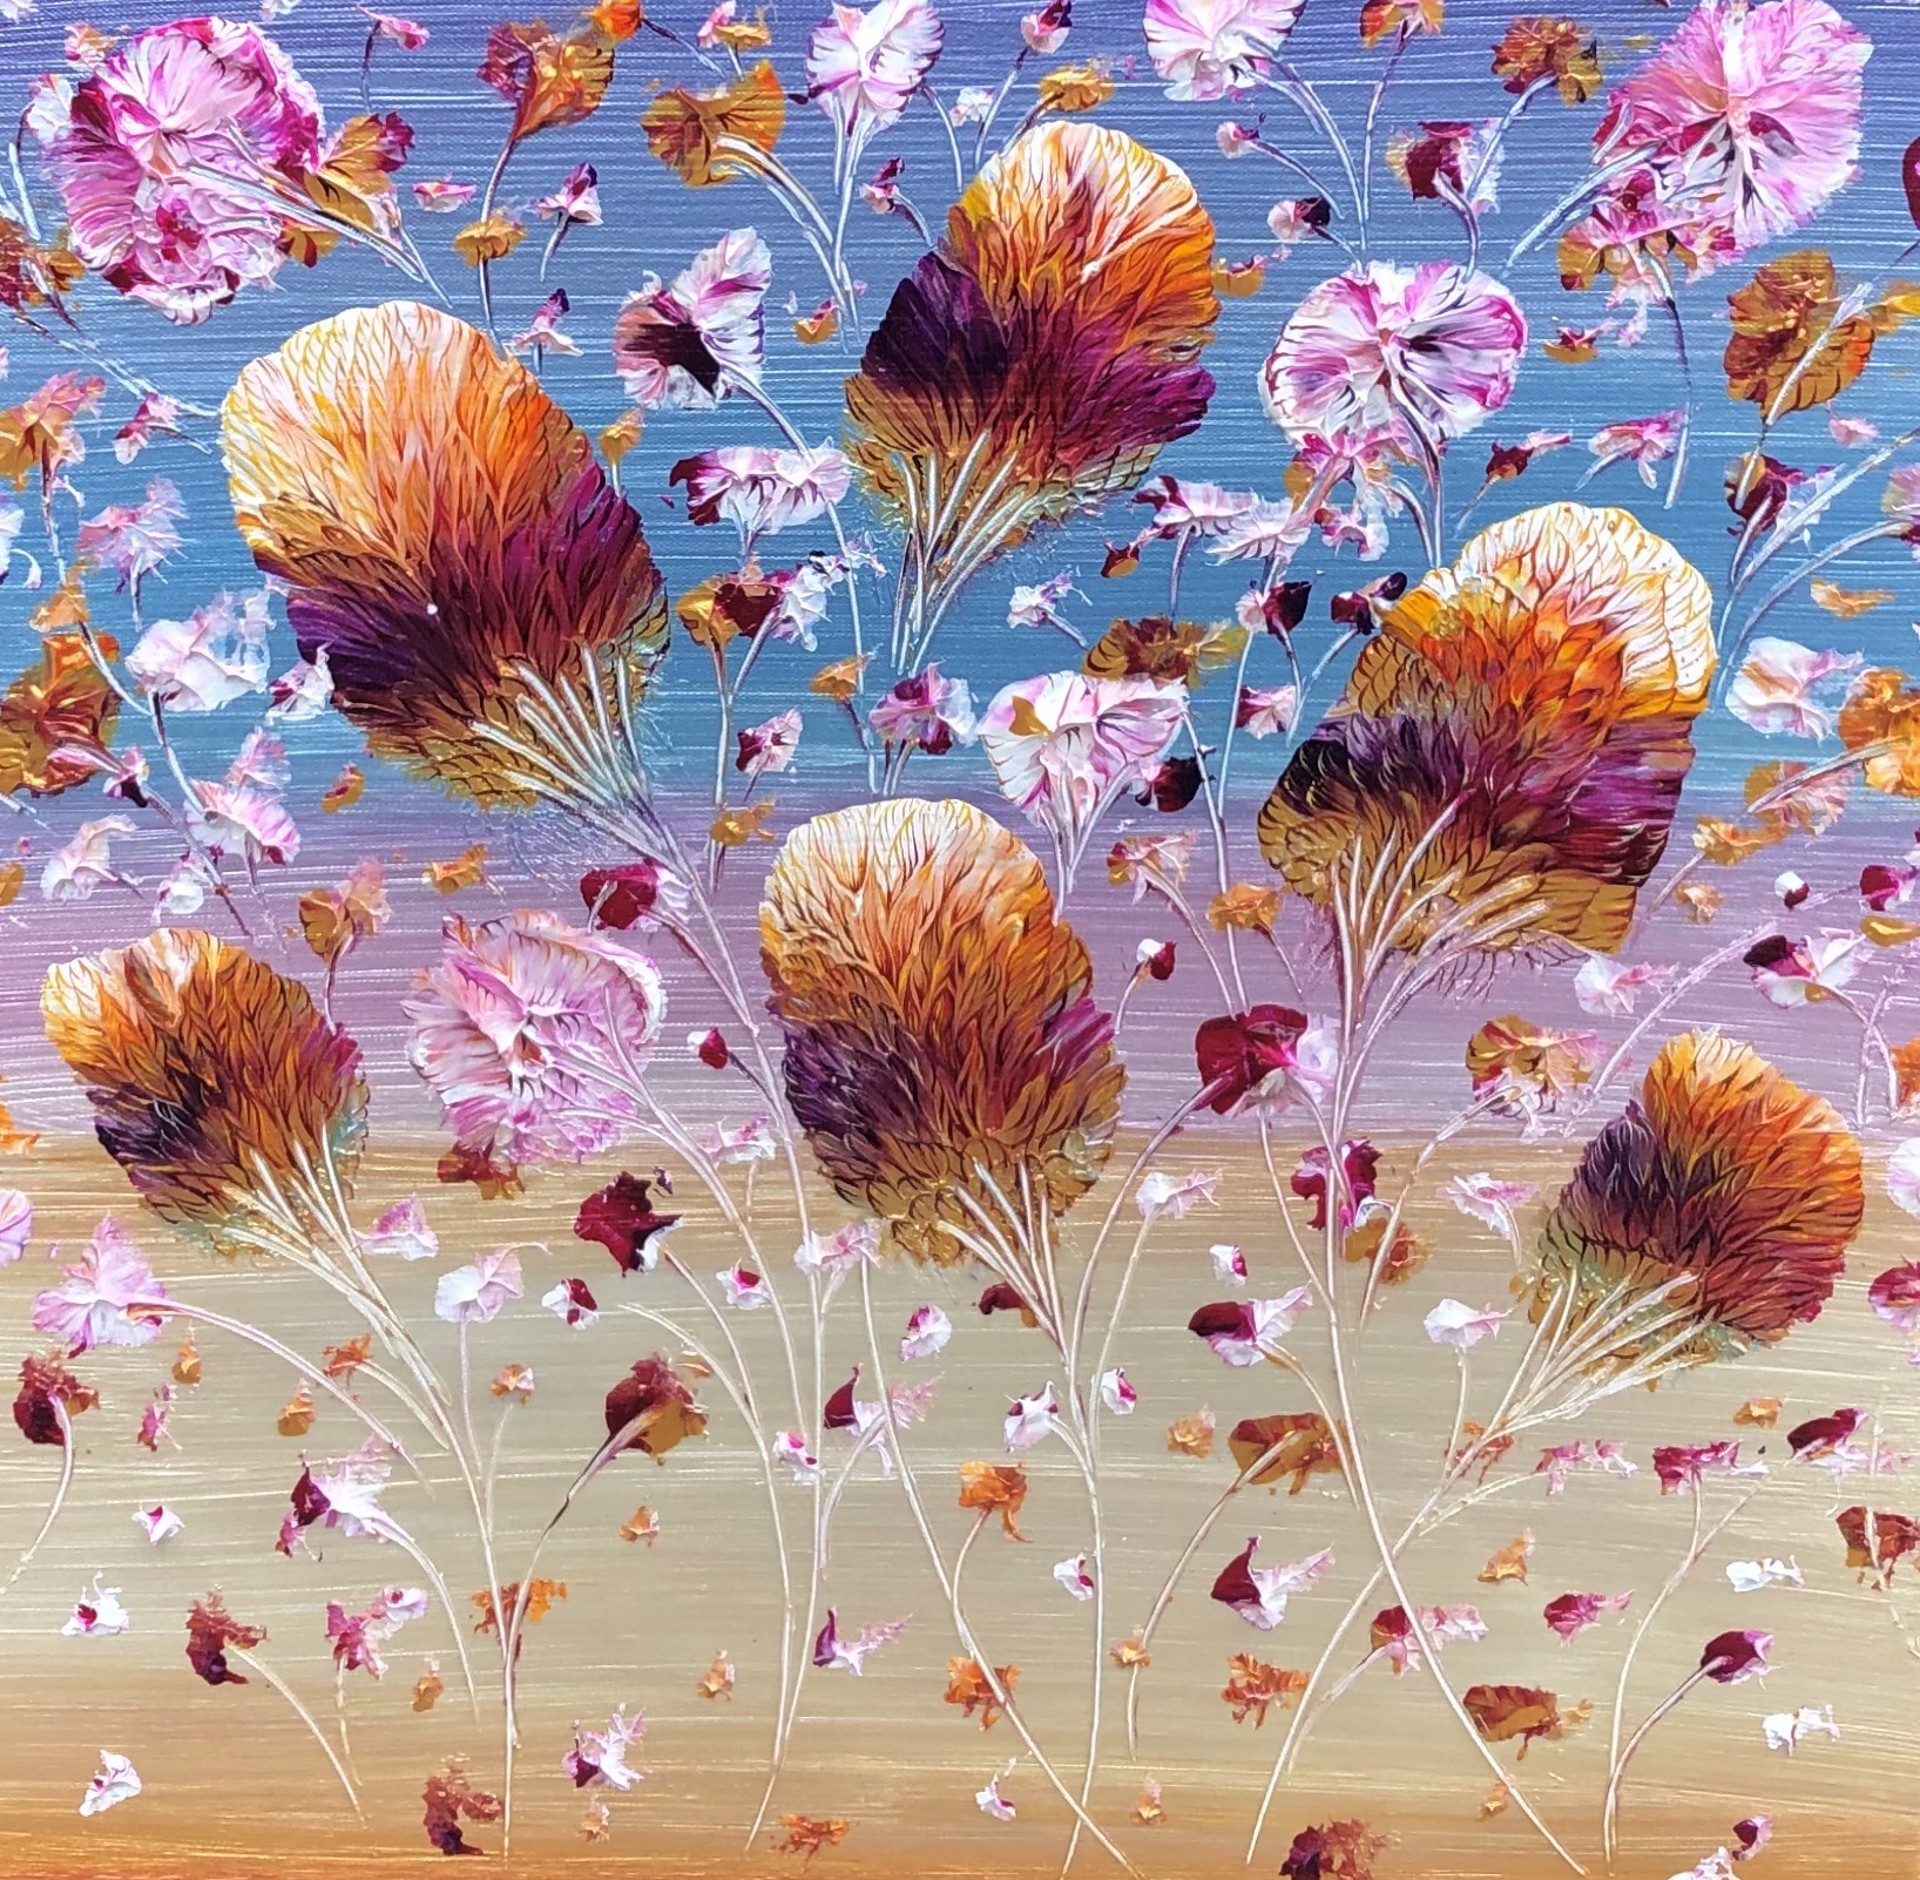 Azure Bloom by Pamela Sukhum